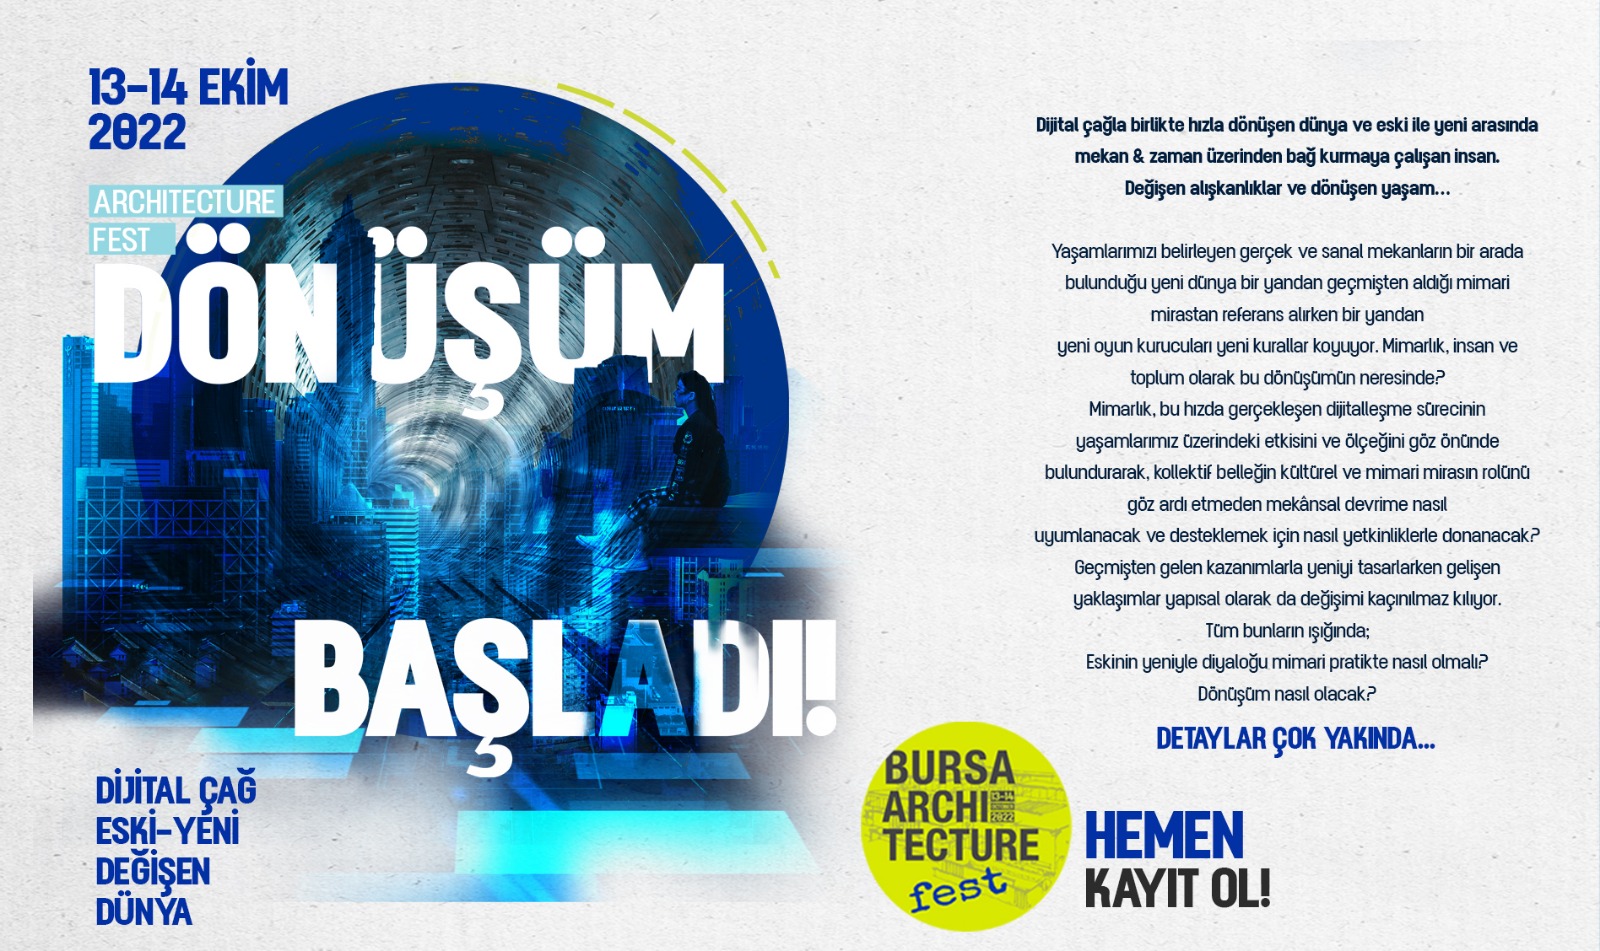 Bursa Architecture Fest